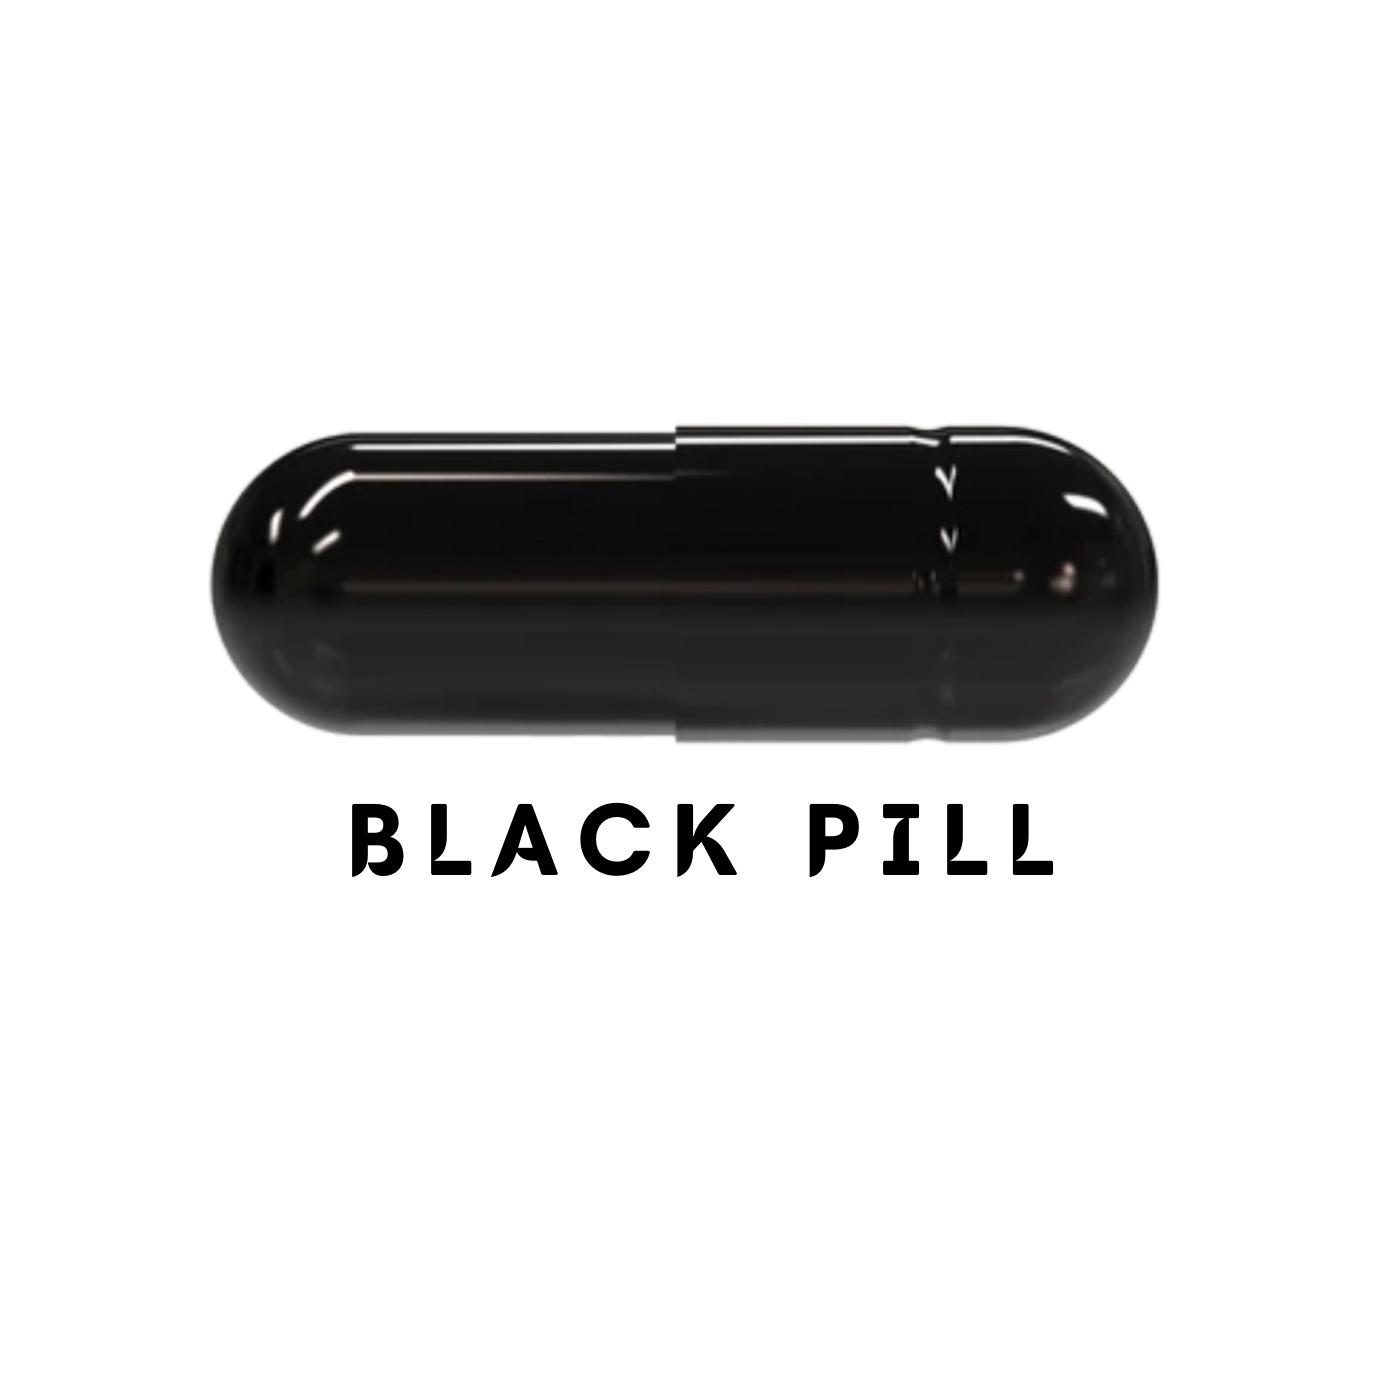 BLACK PILL